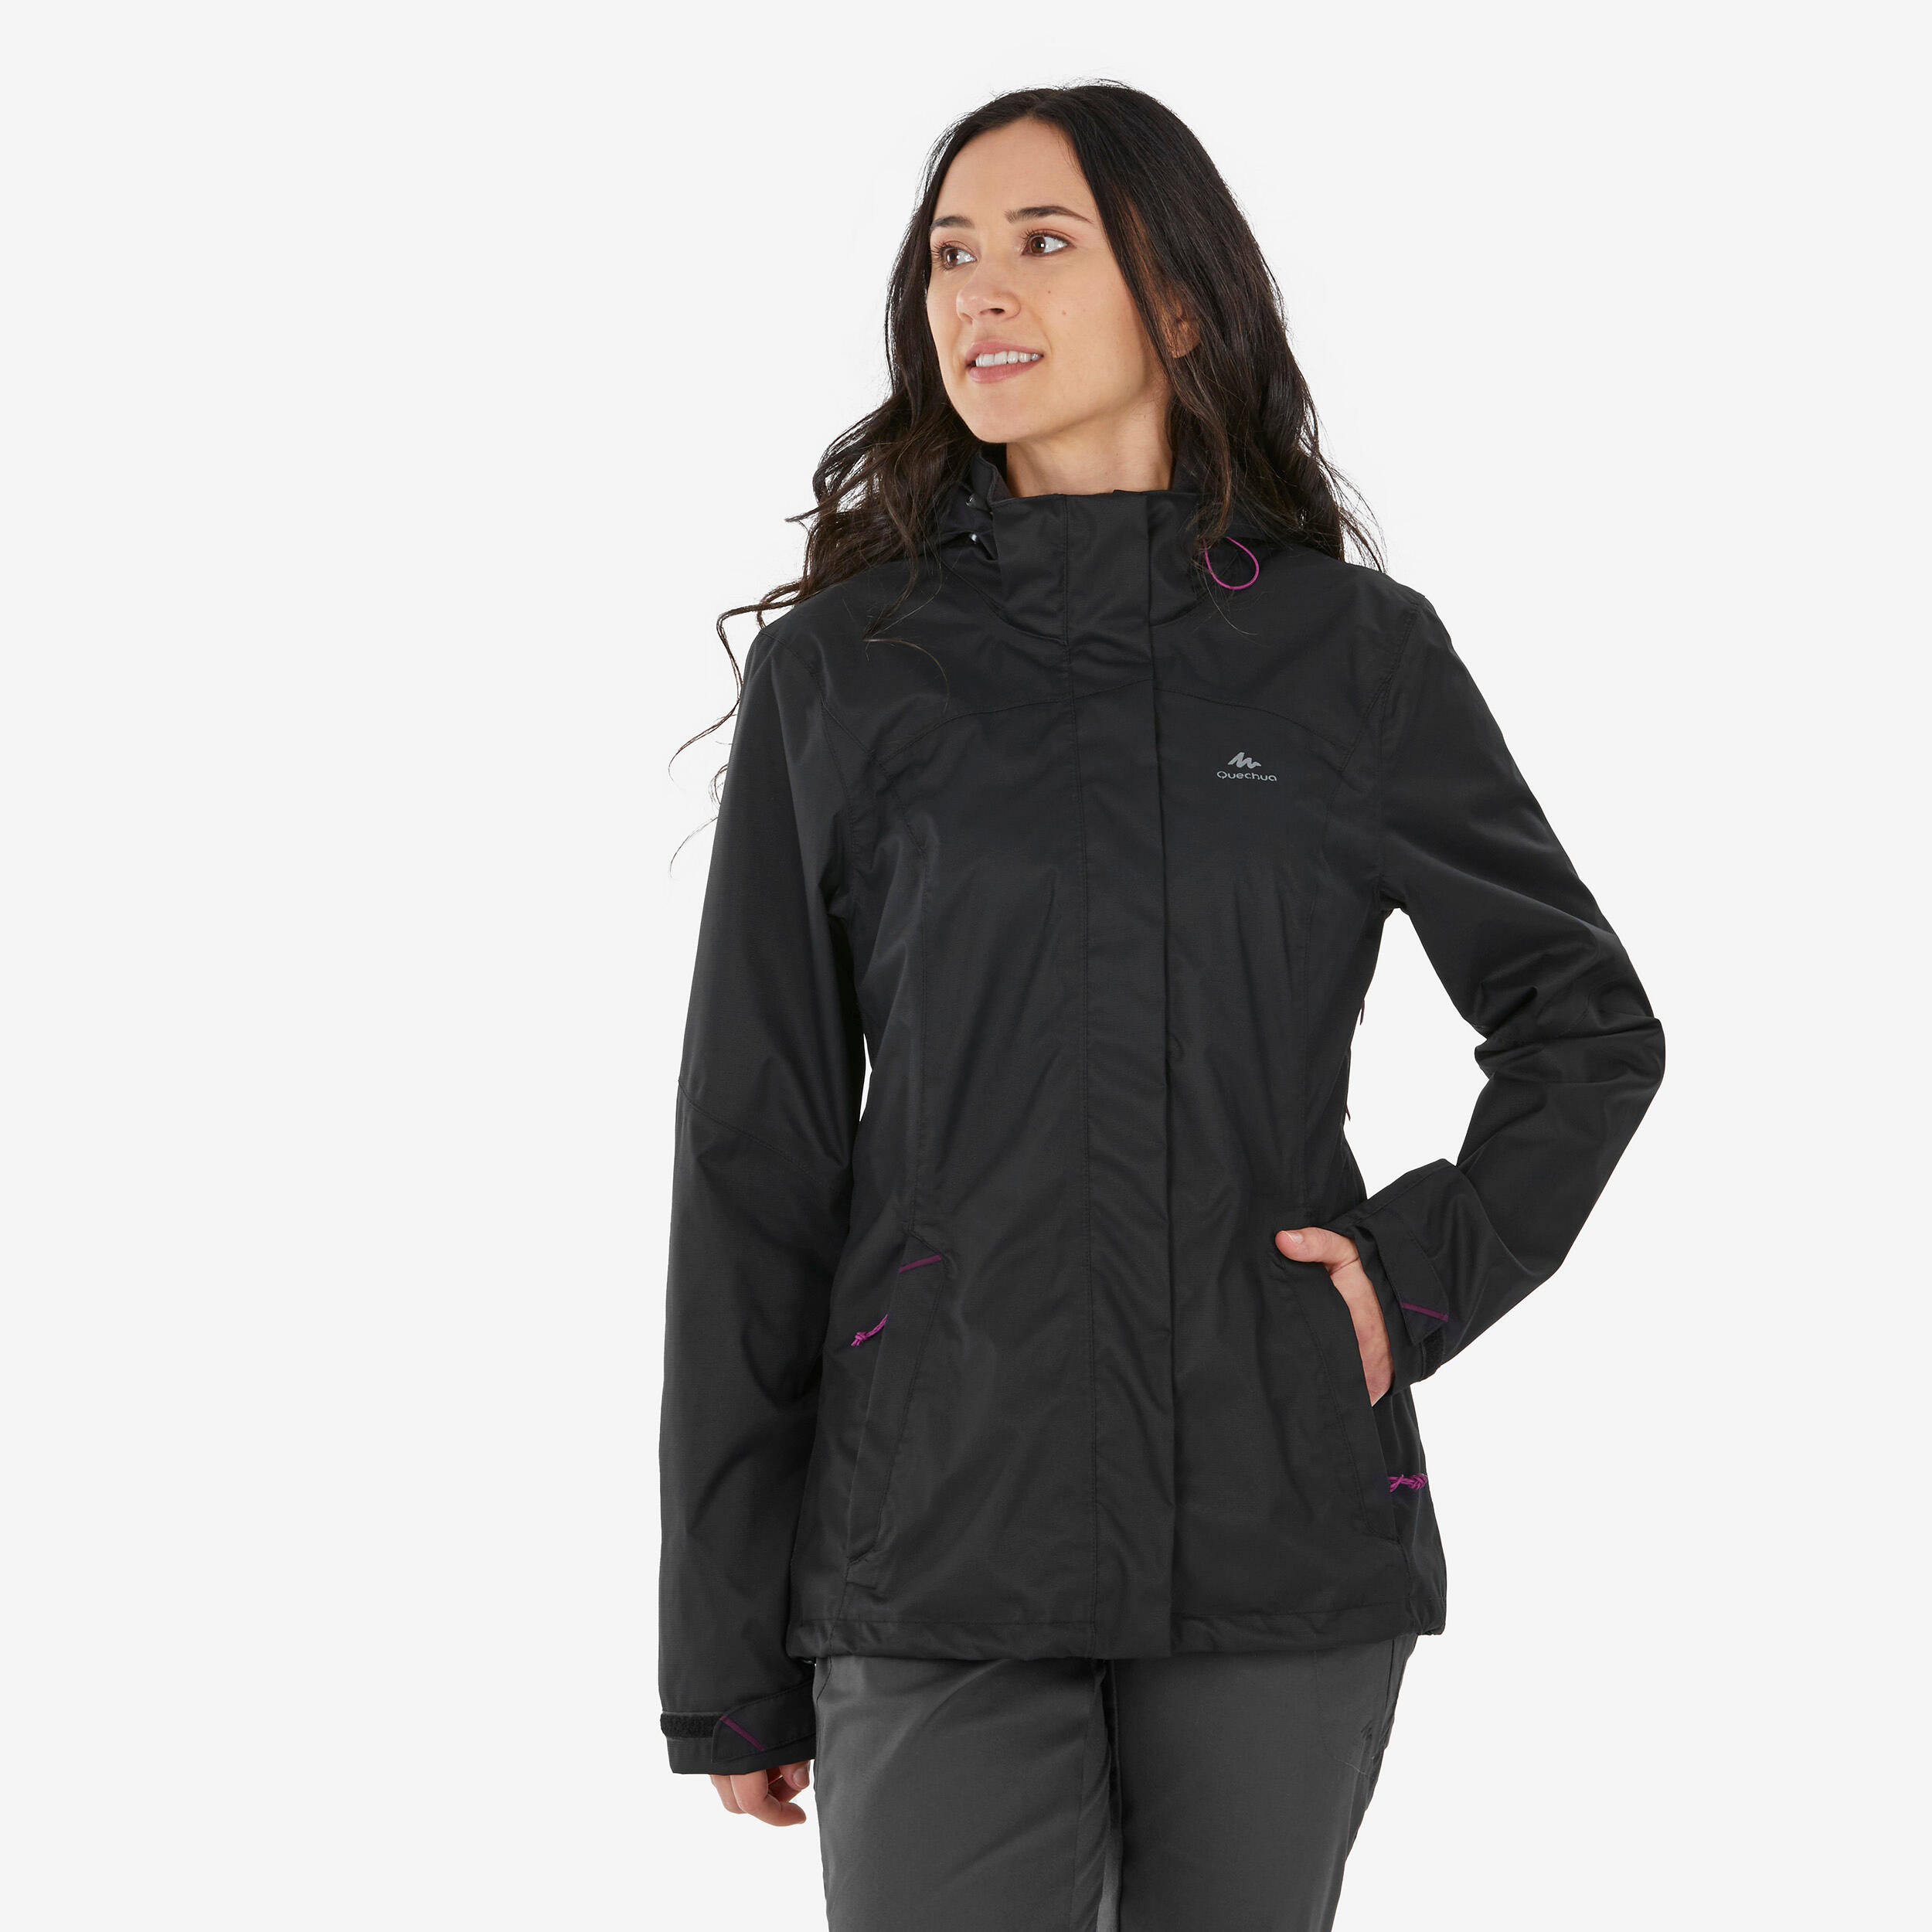 Women’s Hiking Jacket – MH 100 Black